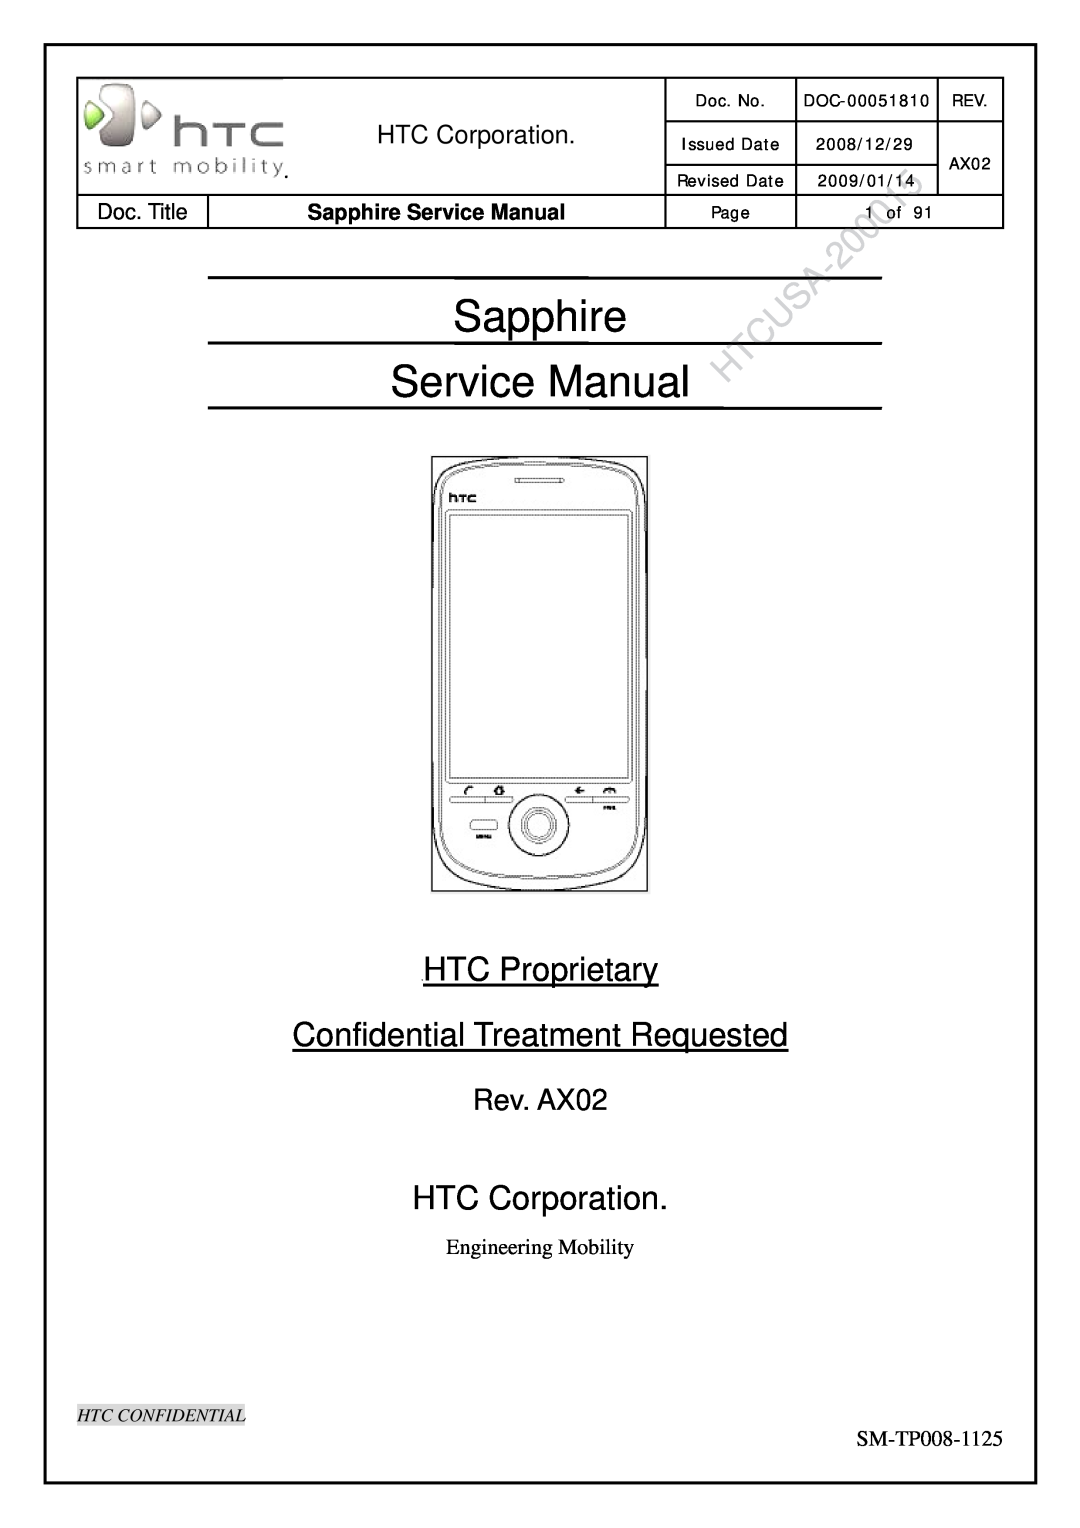 HTC SM-TP008-1125 service manual HTC Corporation, Sapphire Service Manual, Rev. AX02, Htc Confidential, Doc. No, 1 of 